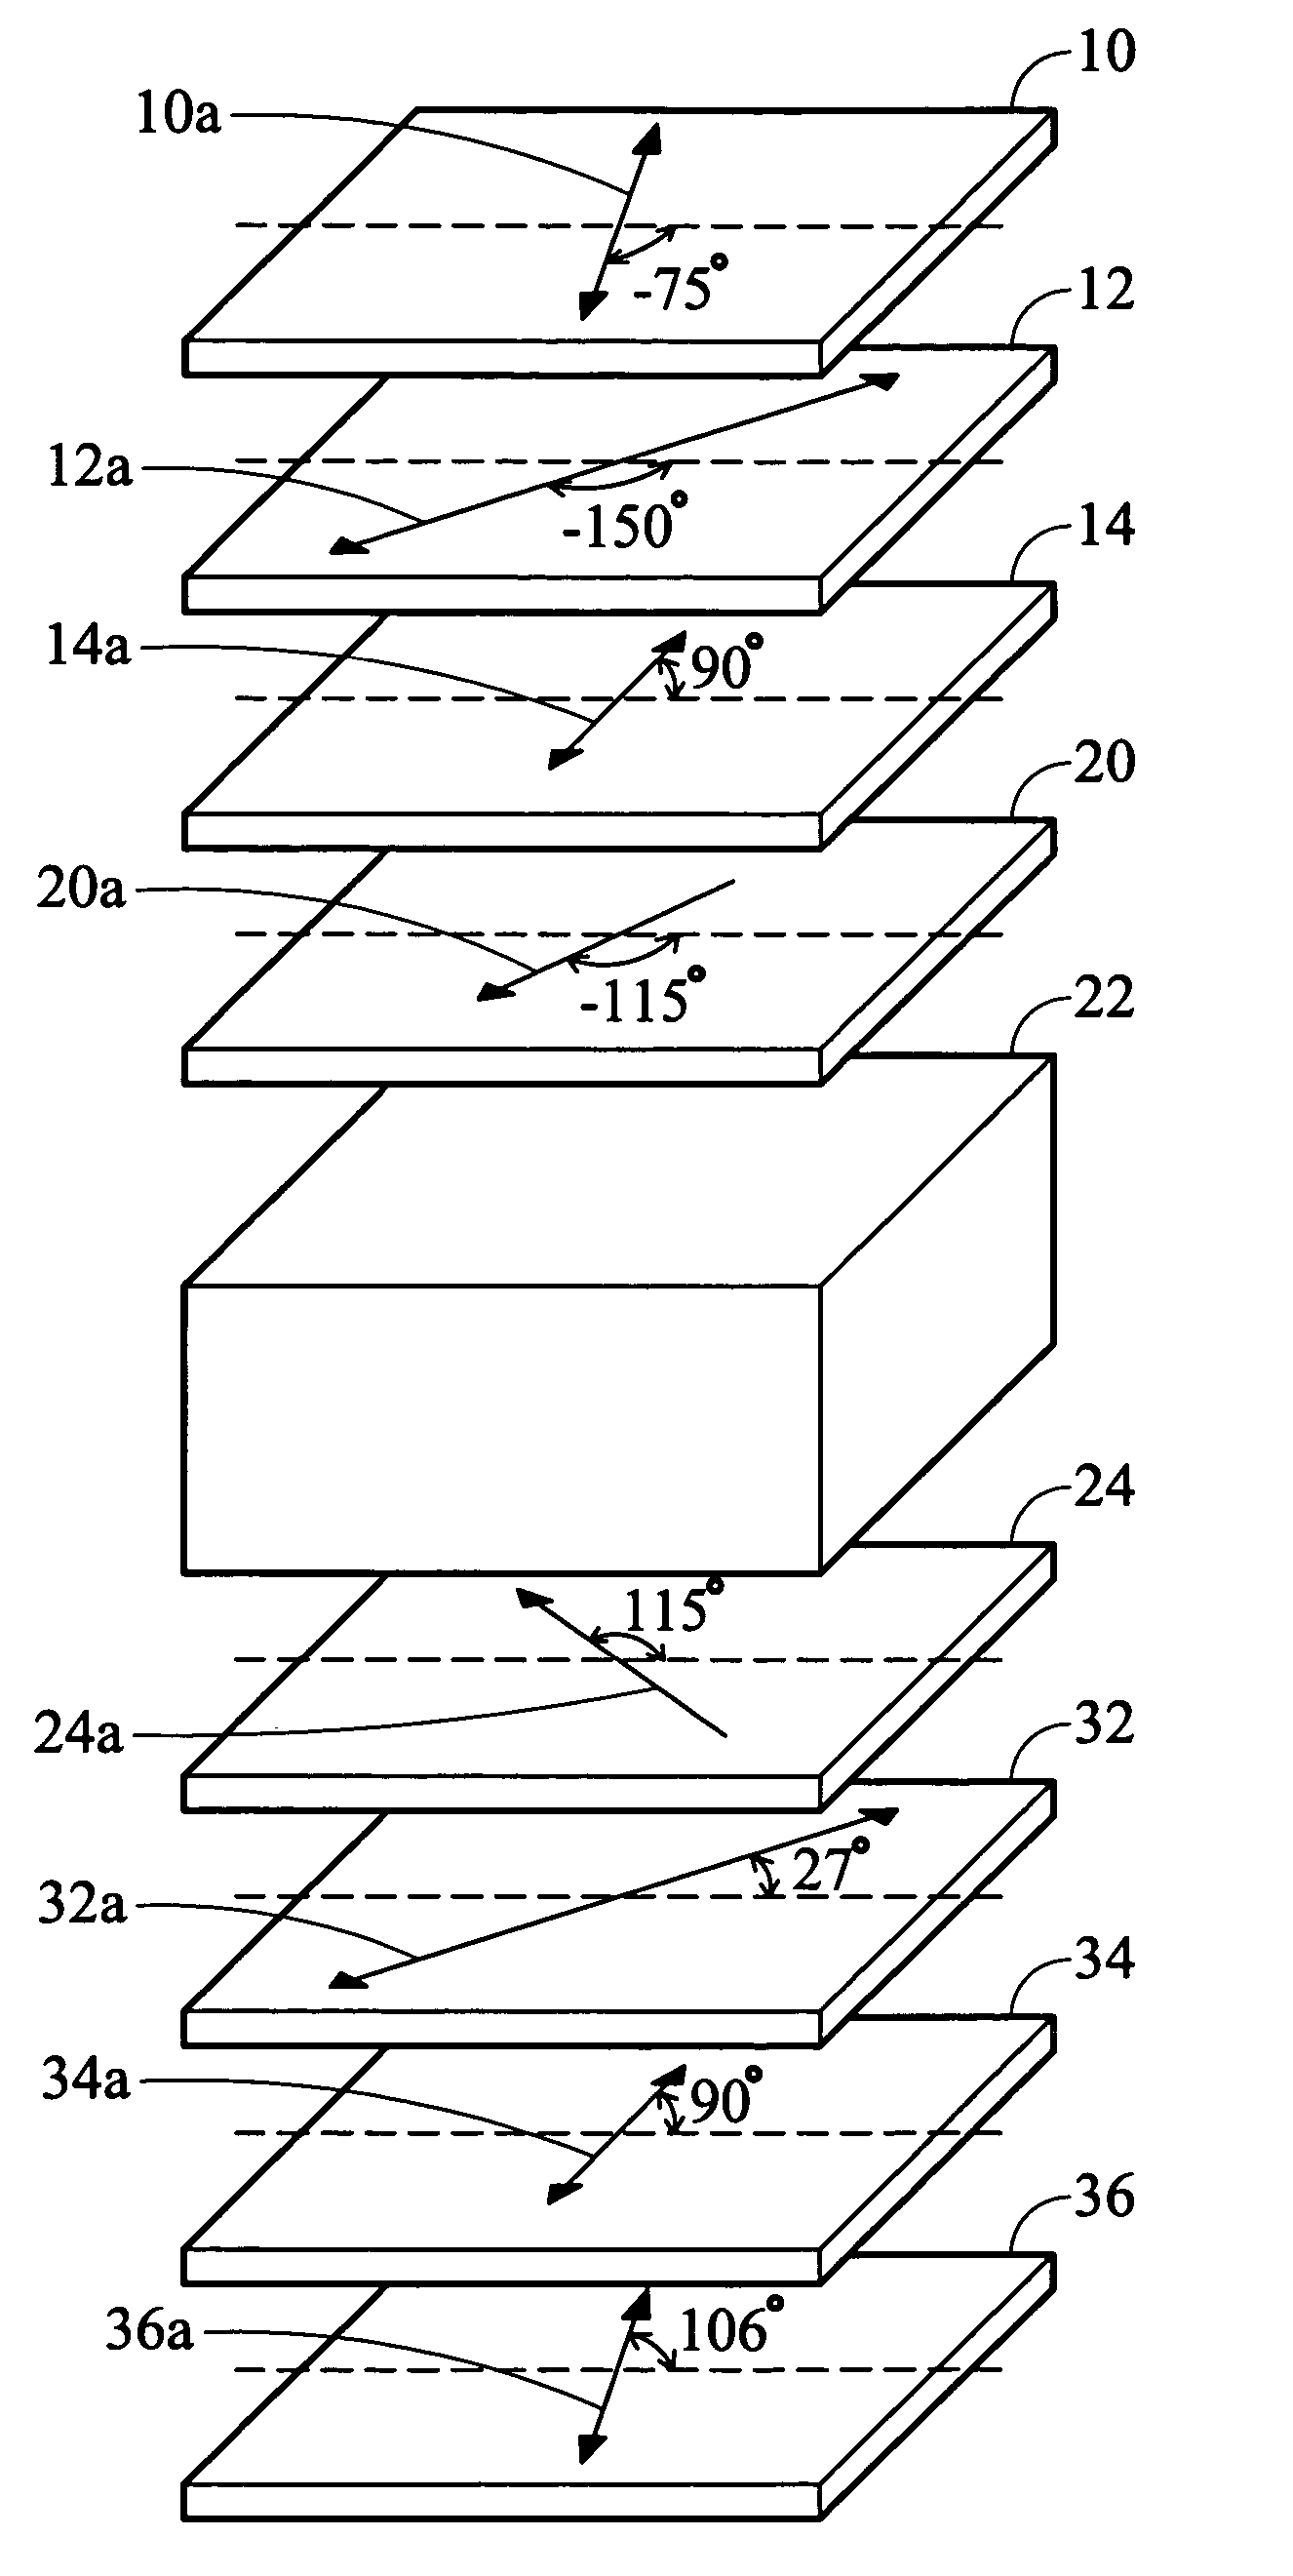 Transflective liquid crystal display device having particular angles between optical axes